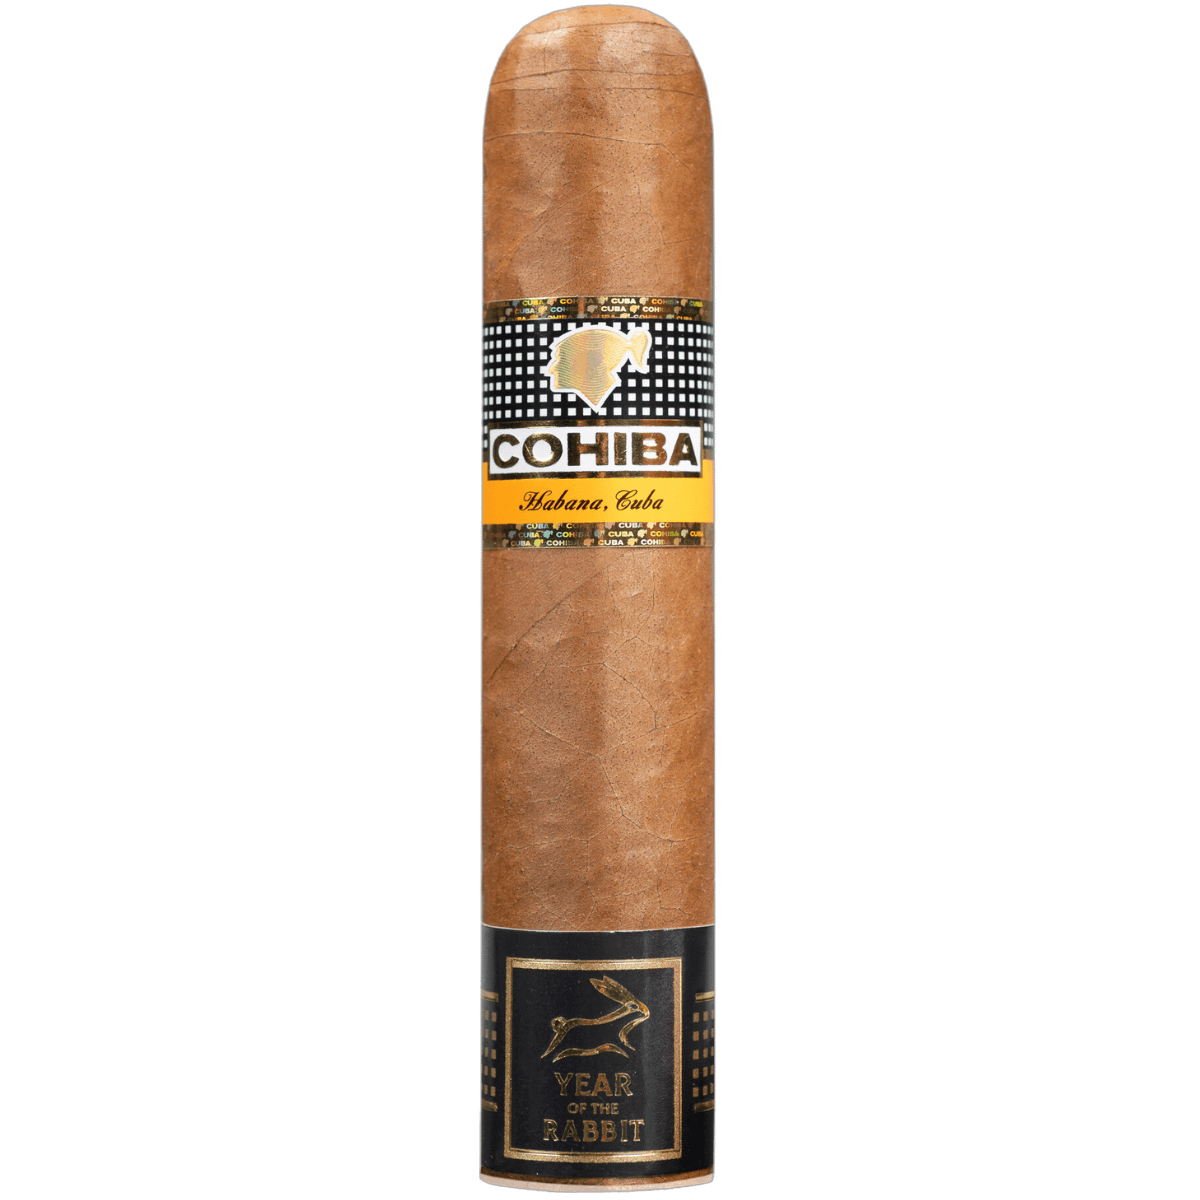 https://www.cigarrenversand24.de/out/pictures/master/product/1/cohiba_siglo_de_oro_1_bei_cigarrenversand24.de.png